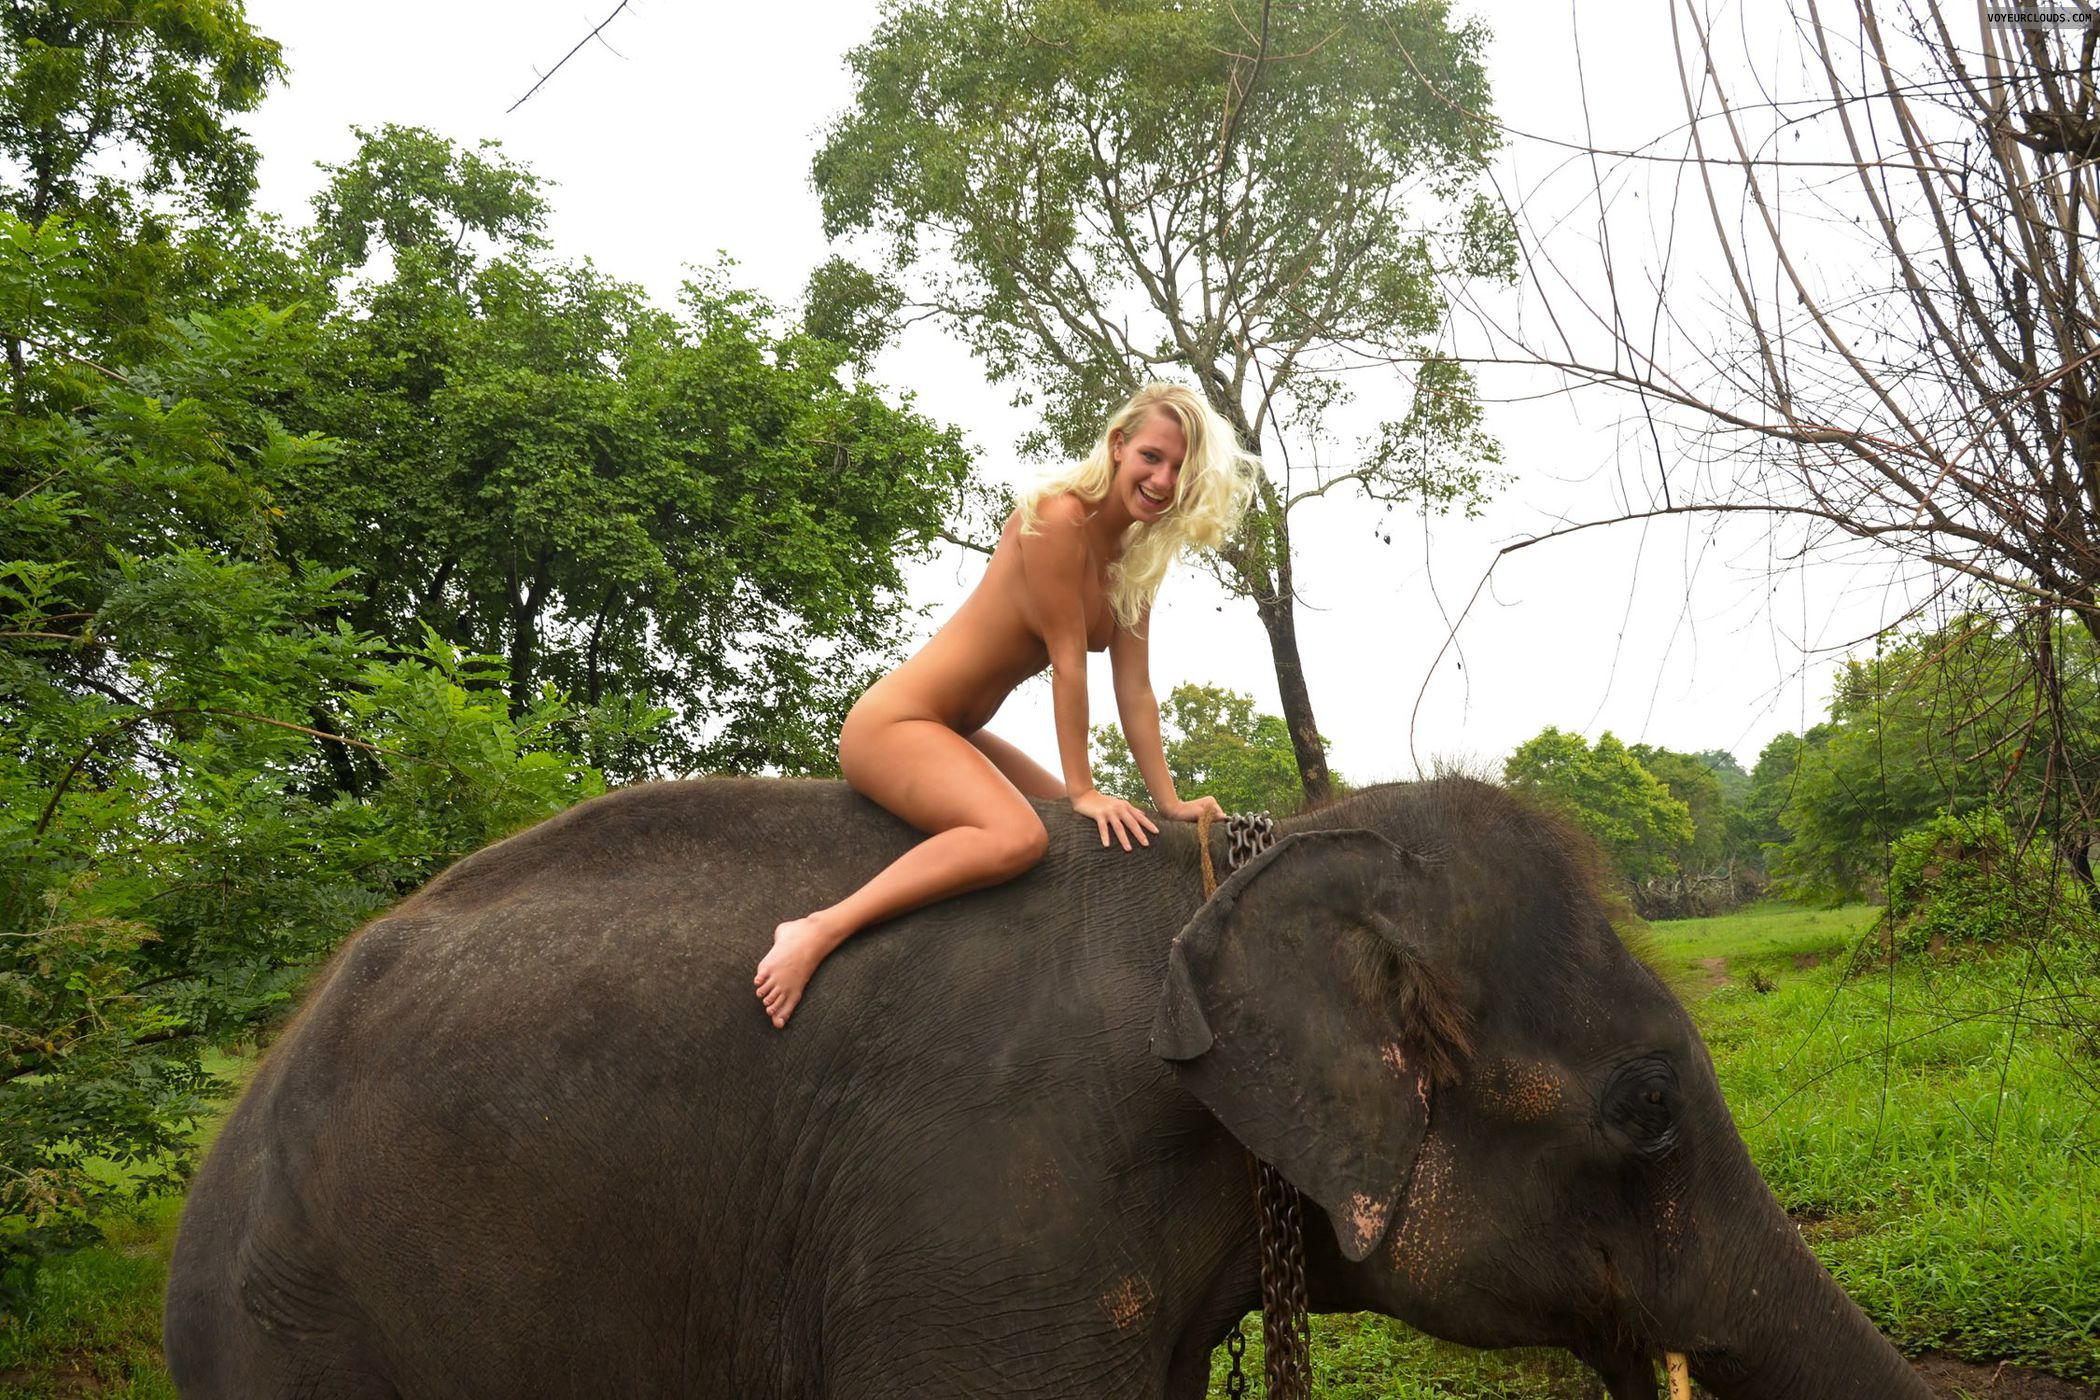 Nude Woman Riding Elephant